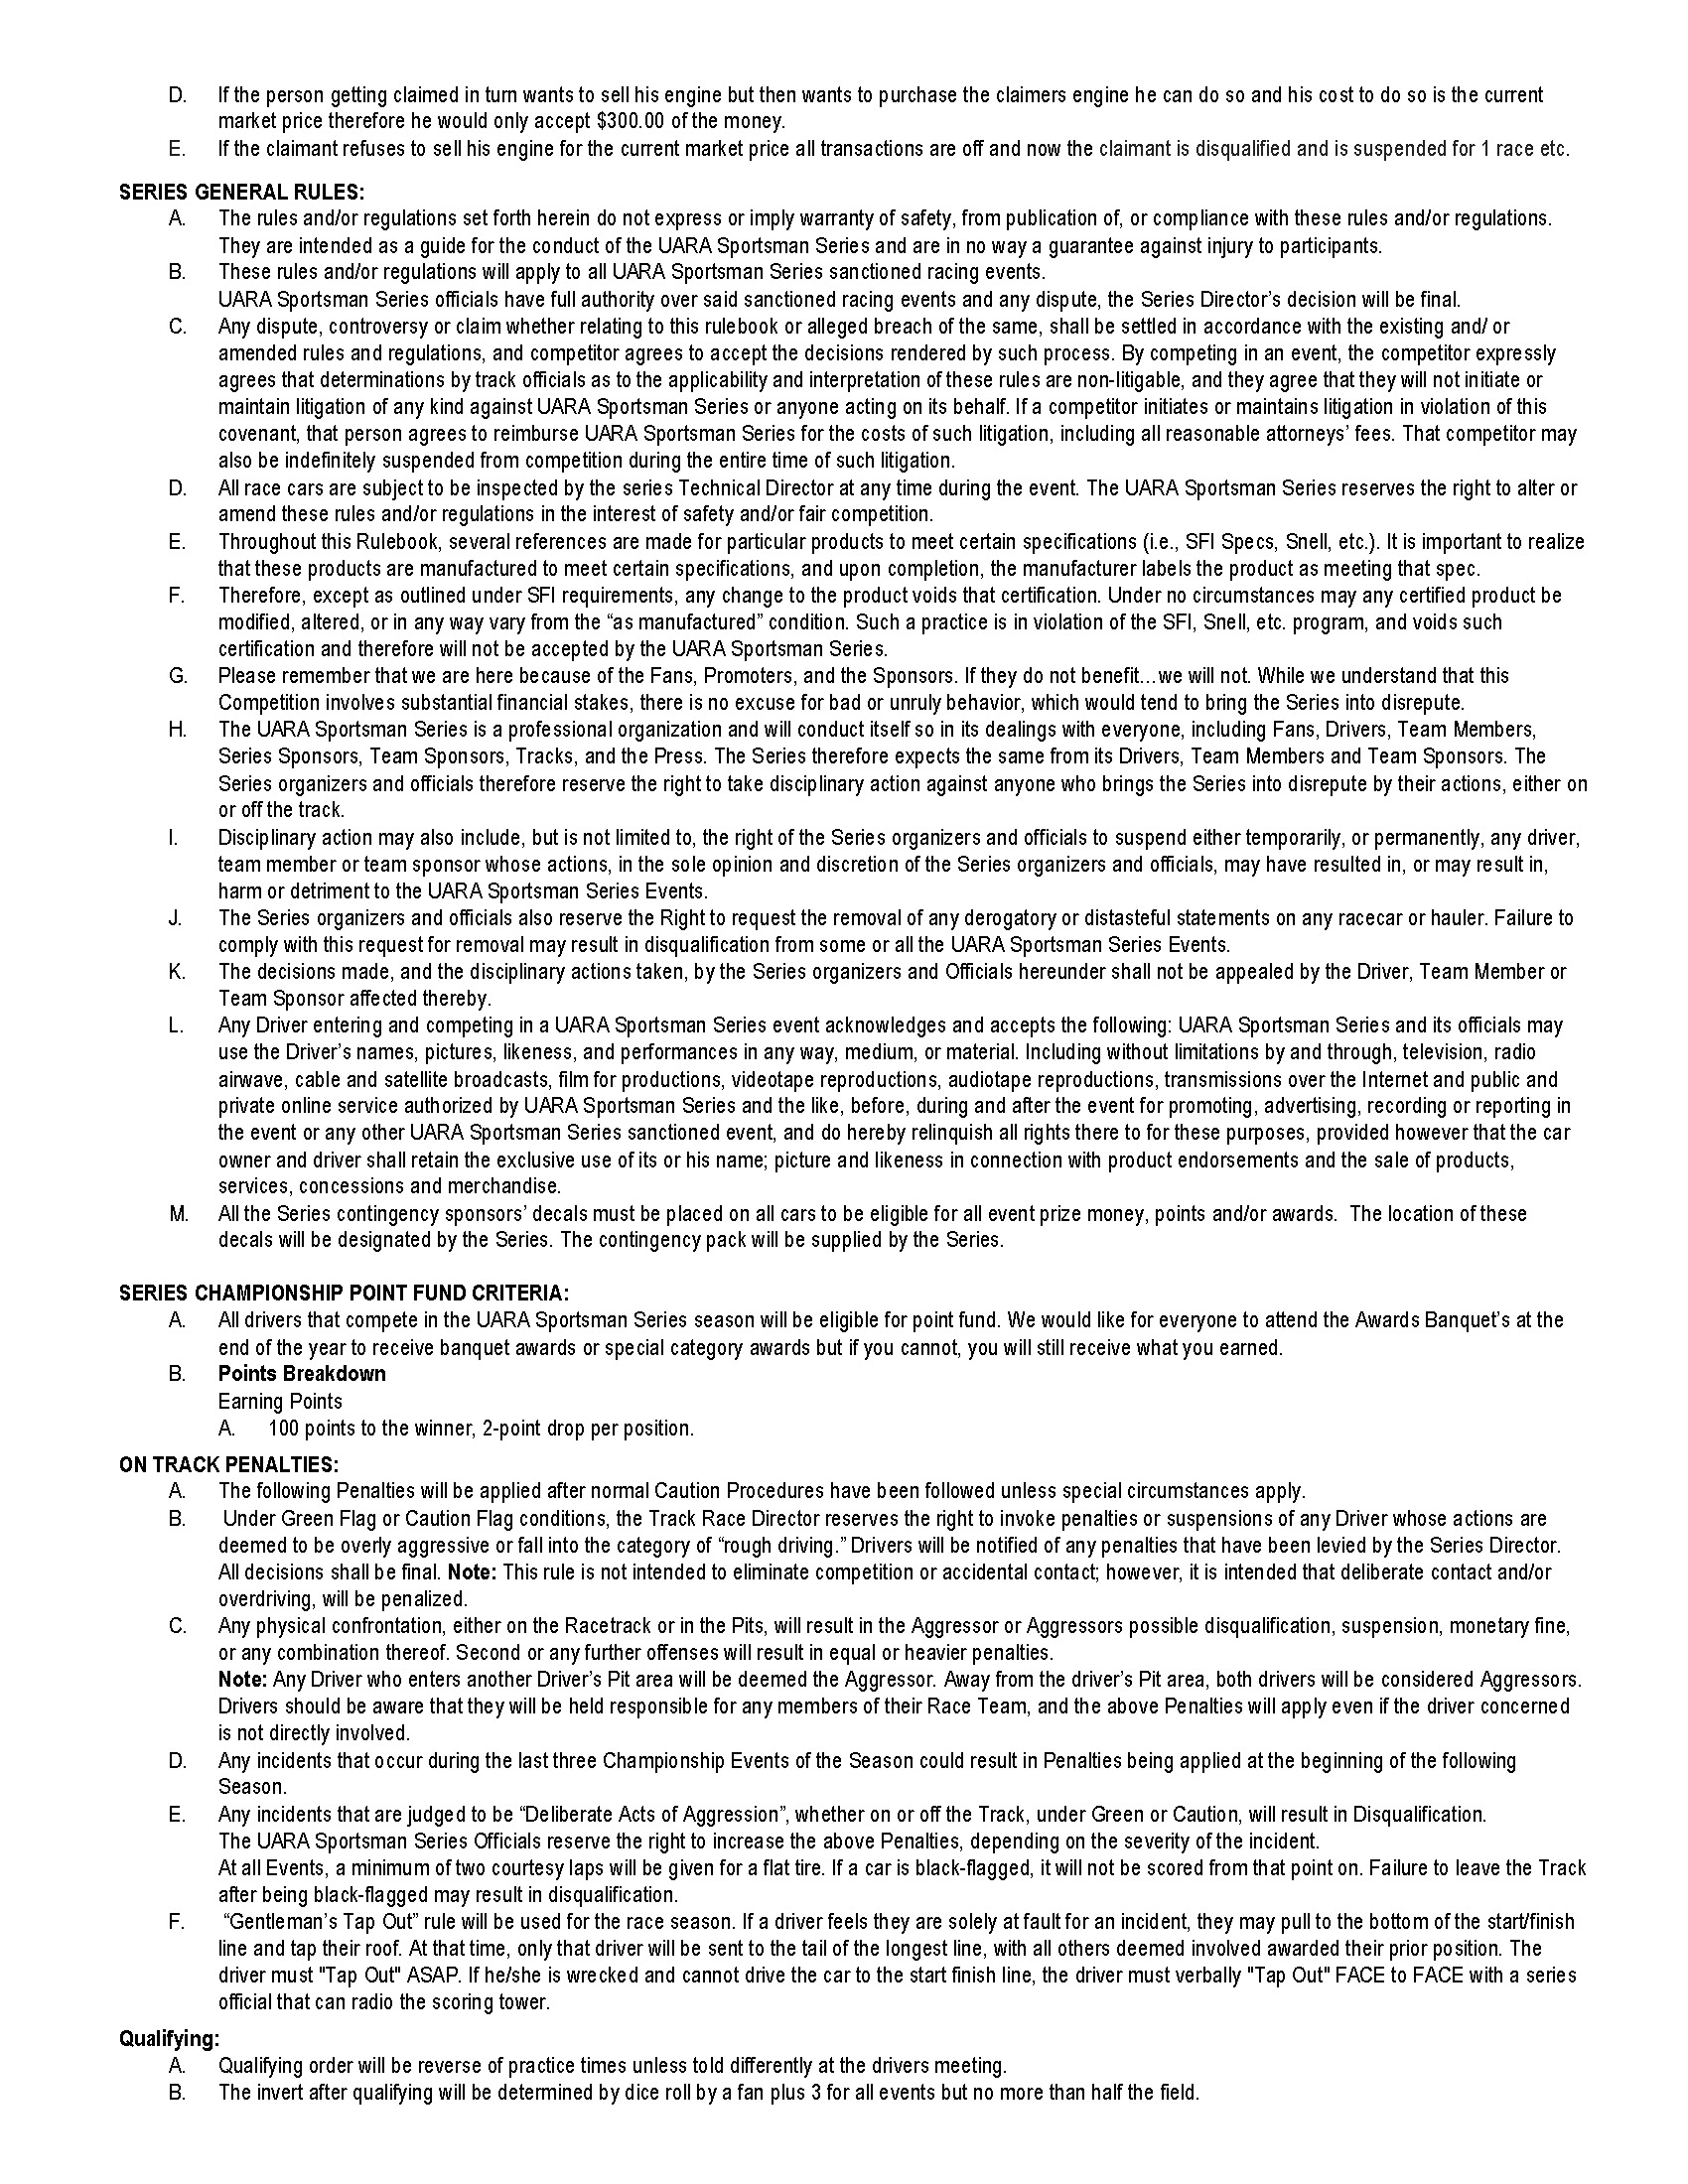 UARA Sportsman Series Rules - Page 4/6